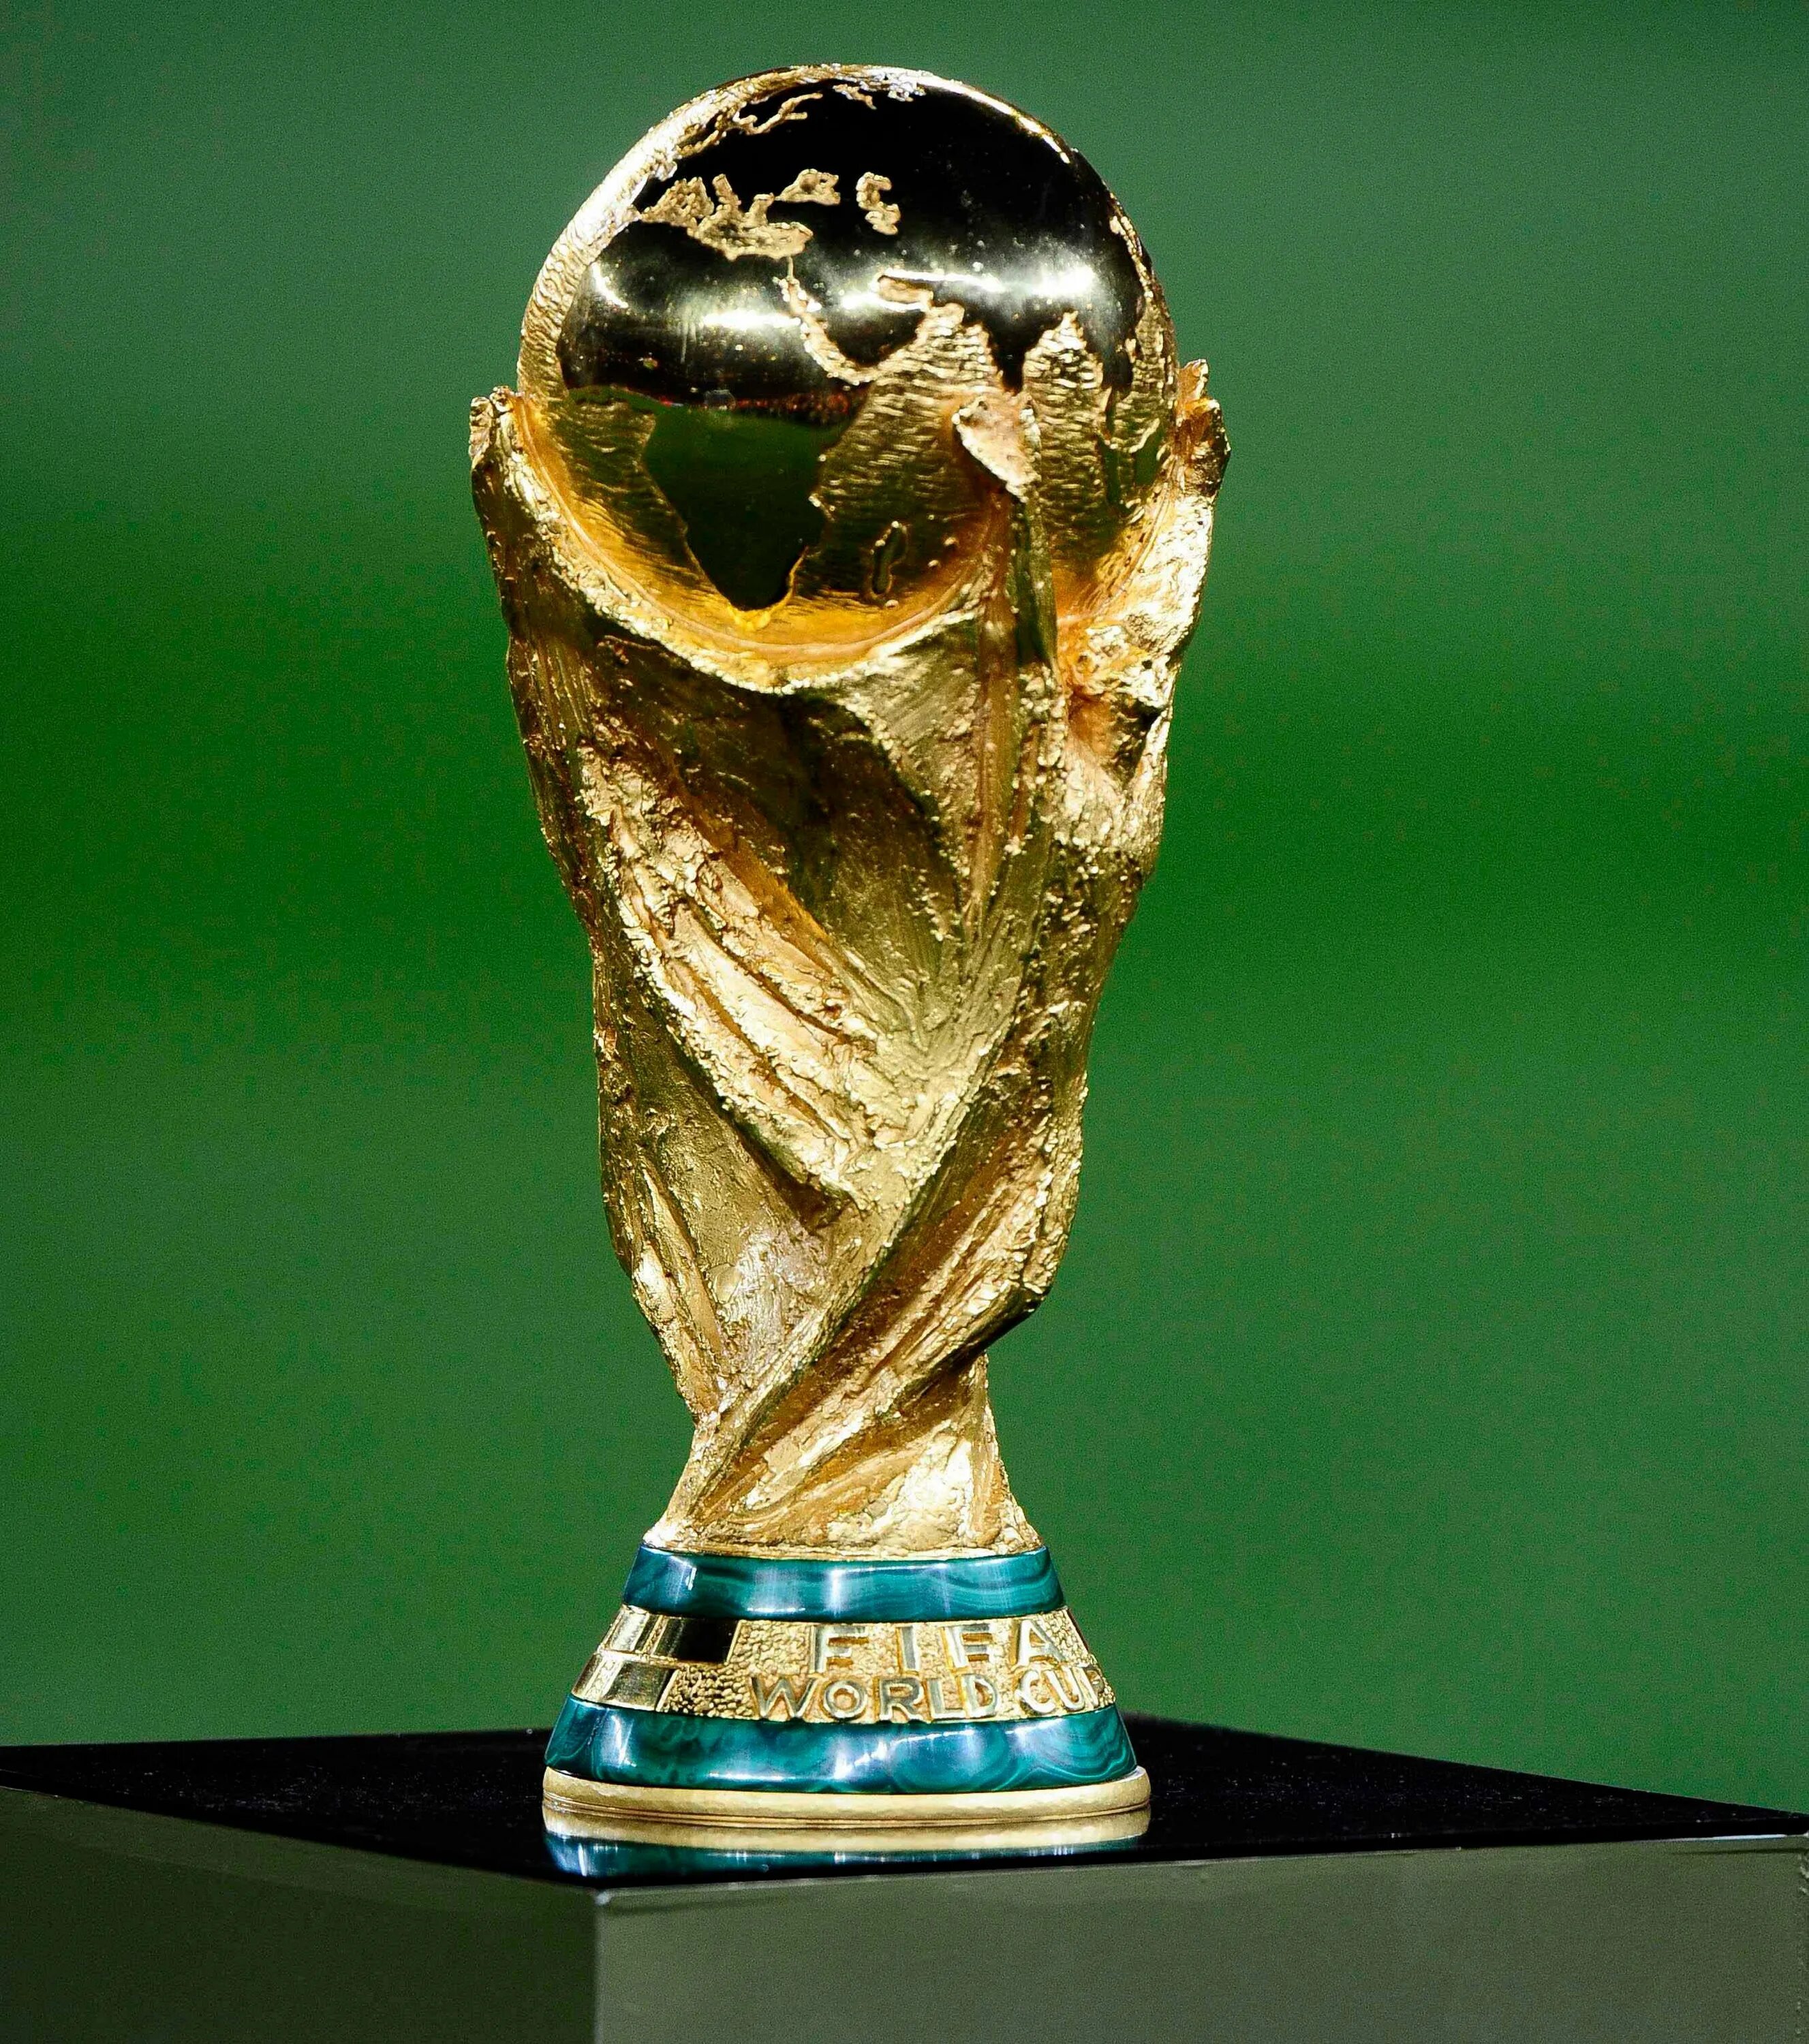 Coupe du monde Qatar 2022. World Cup Coupe du monde. Кубок по футболу.